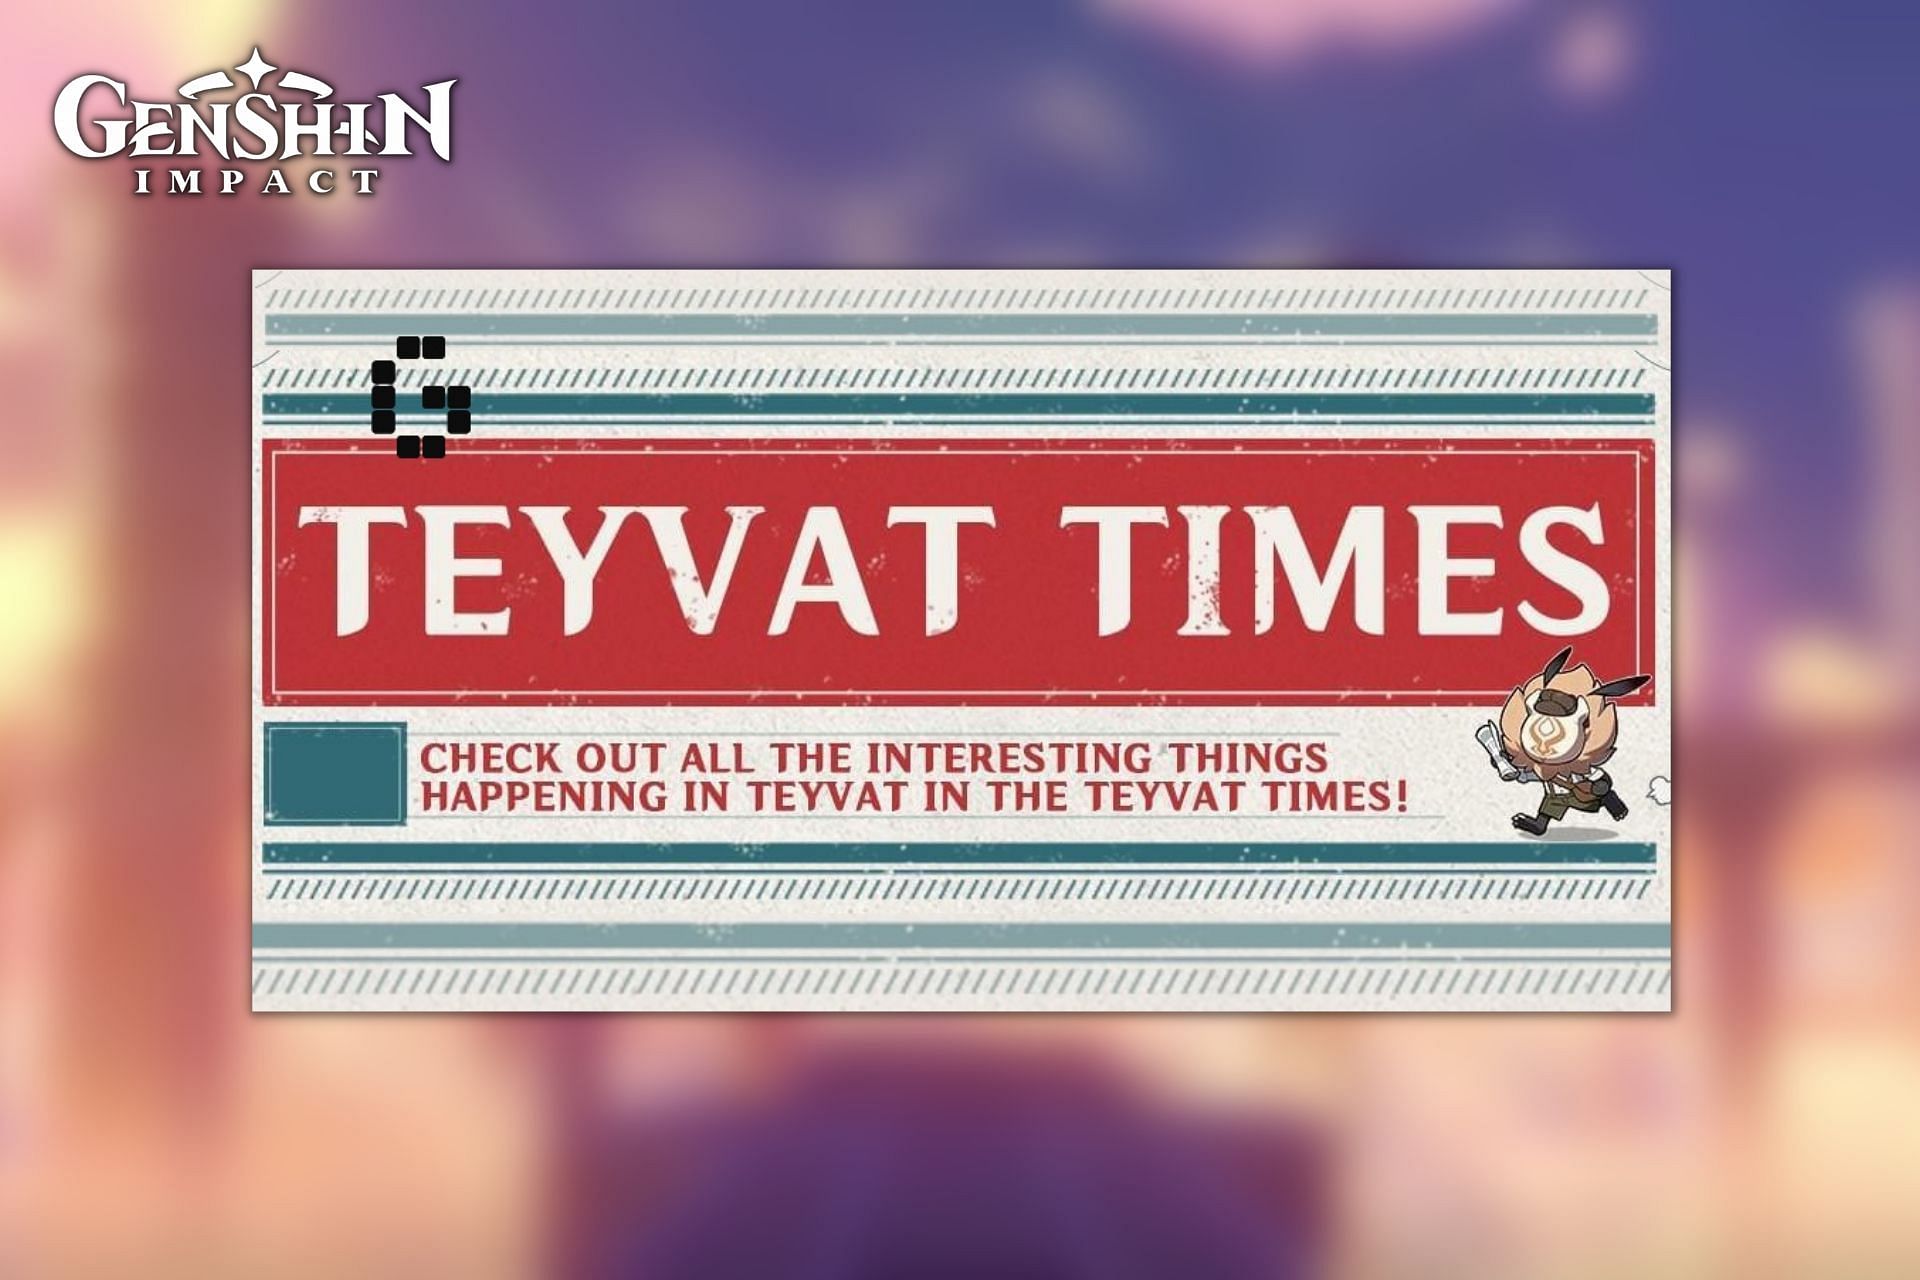 Genshin Impact announces the return of Teyvat Times in March 2022 (Image via Sportskeeda)